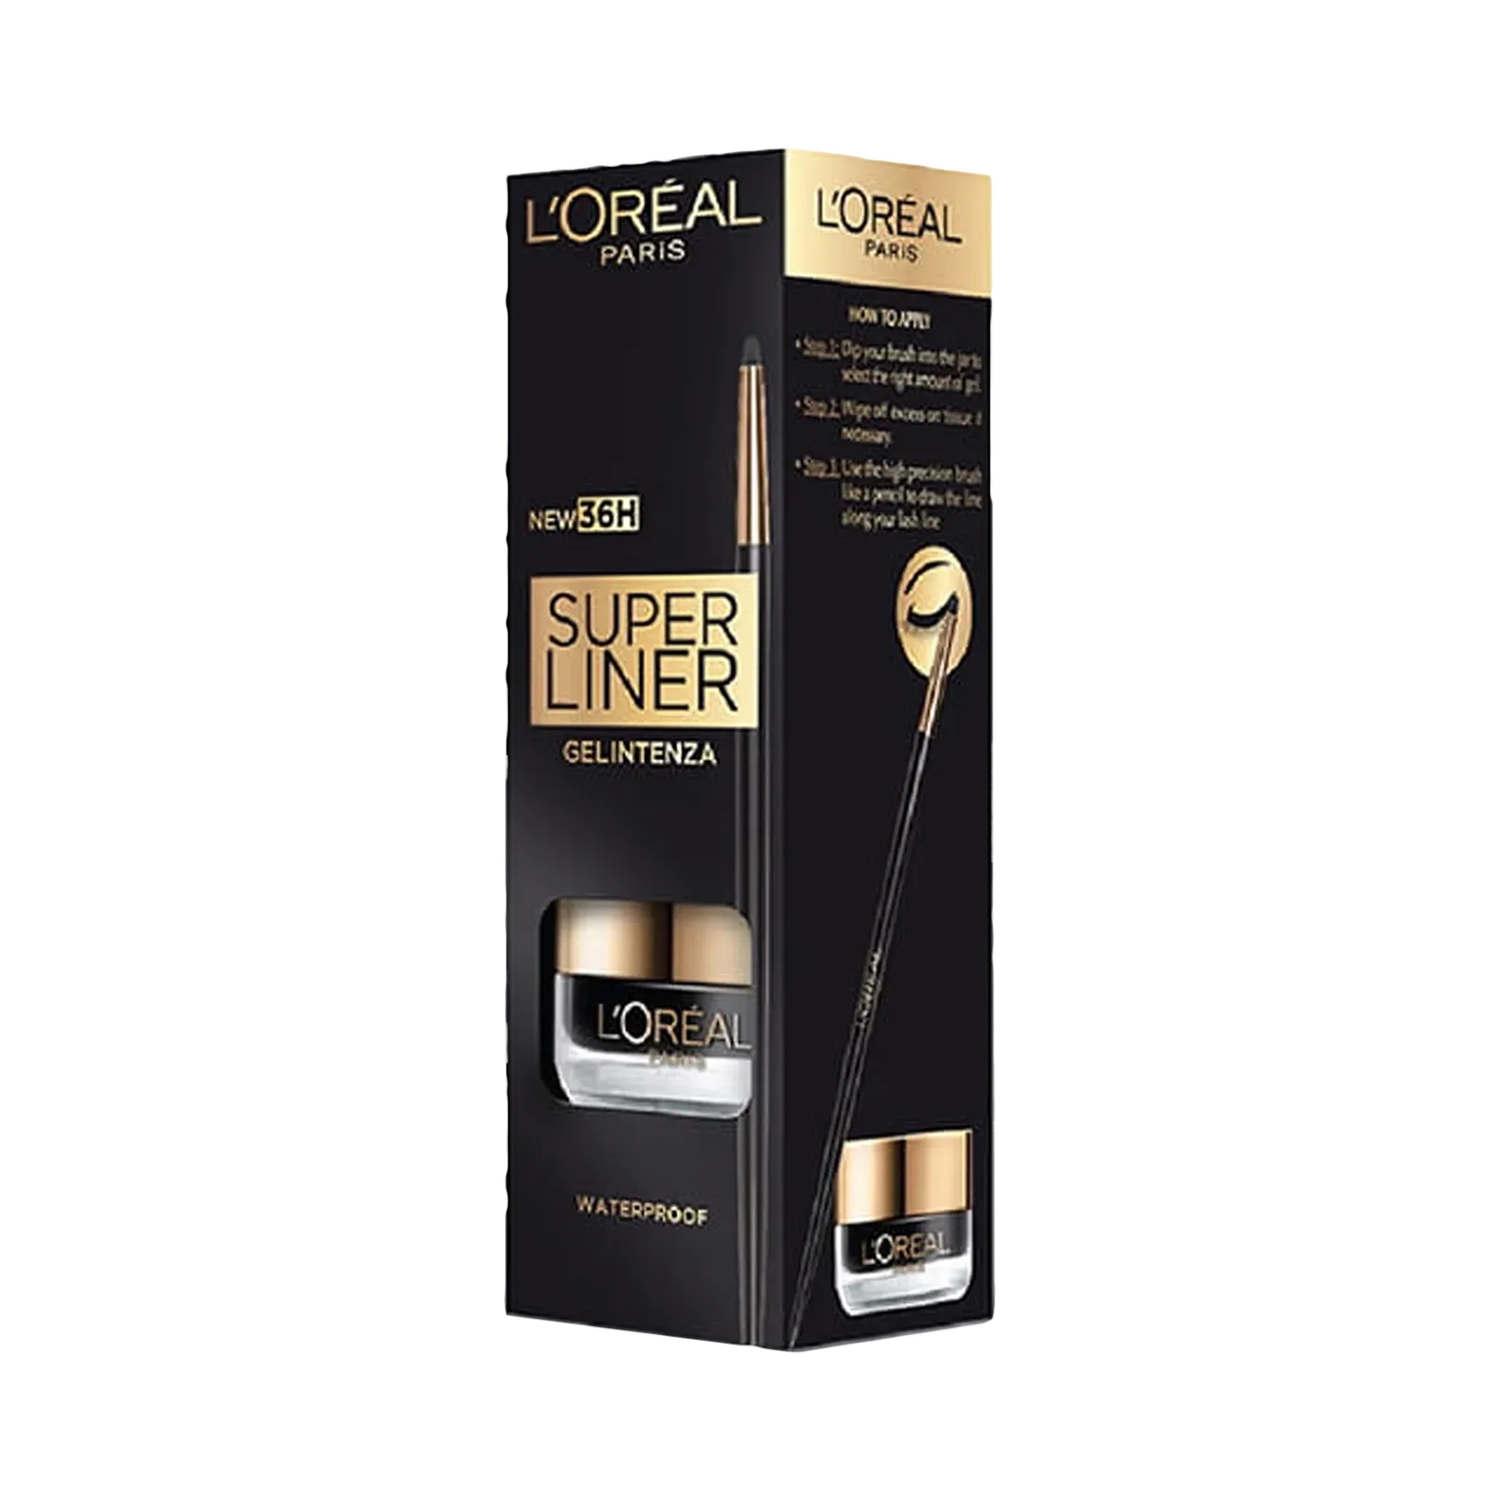 L'Oreal Paris | L'Oreal Paris Super Liner Gel Intenza Eyeliner, Profound Black, 2.8g